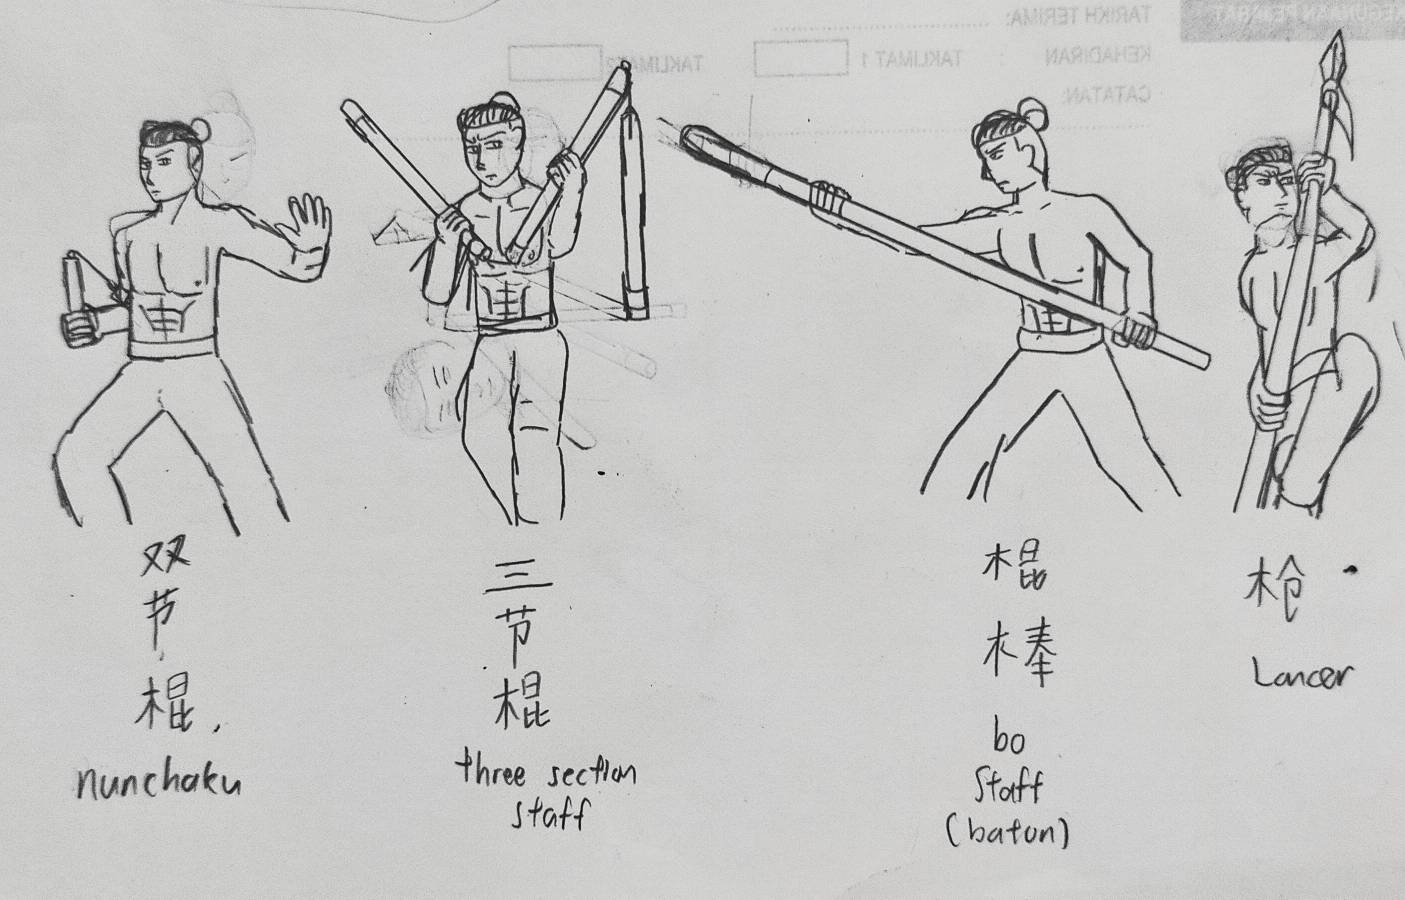 Hero of the East-- 3 section staff vs nunchucku 